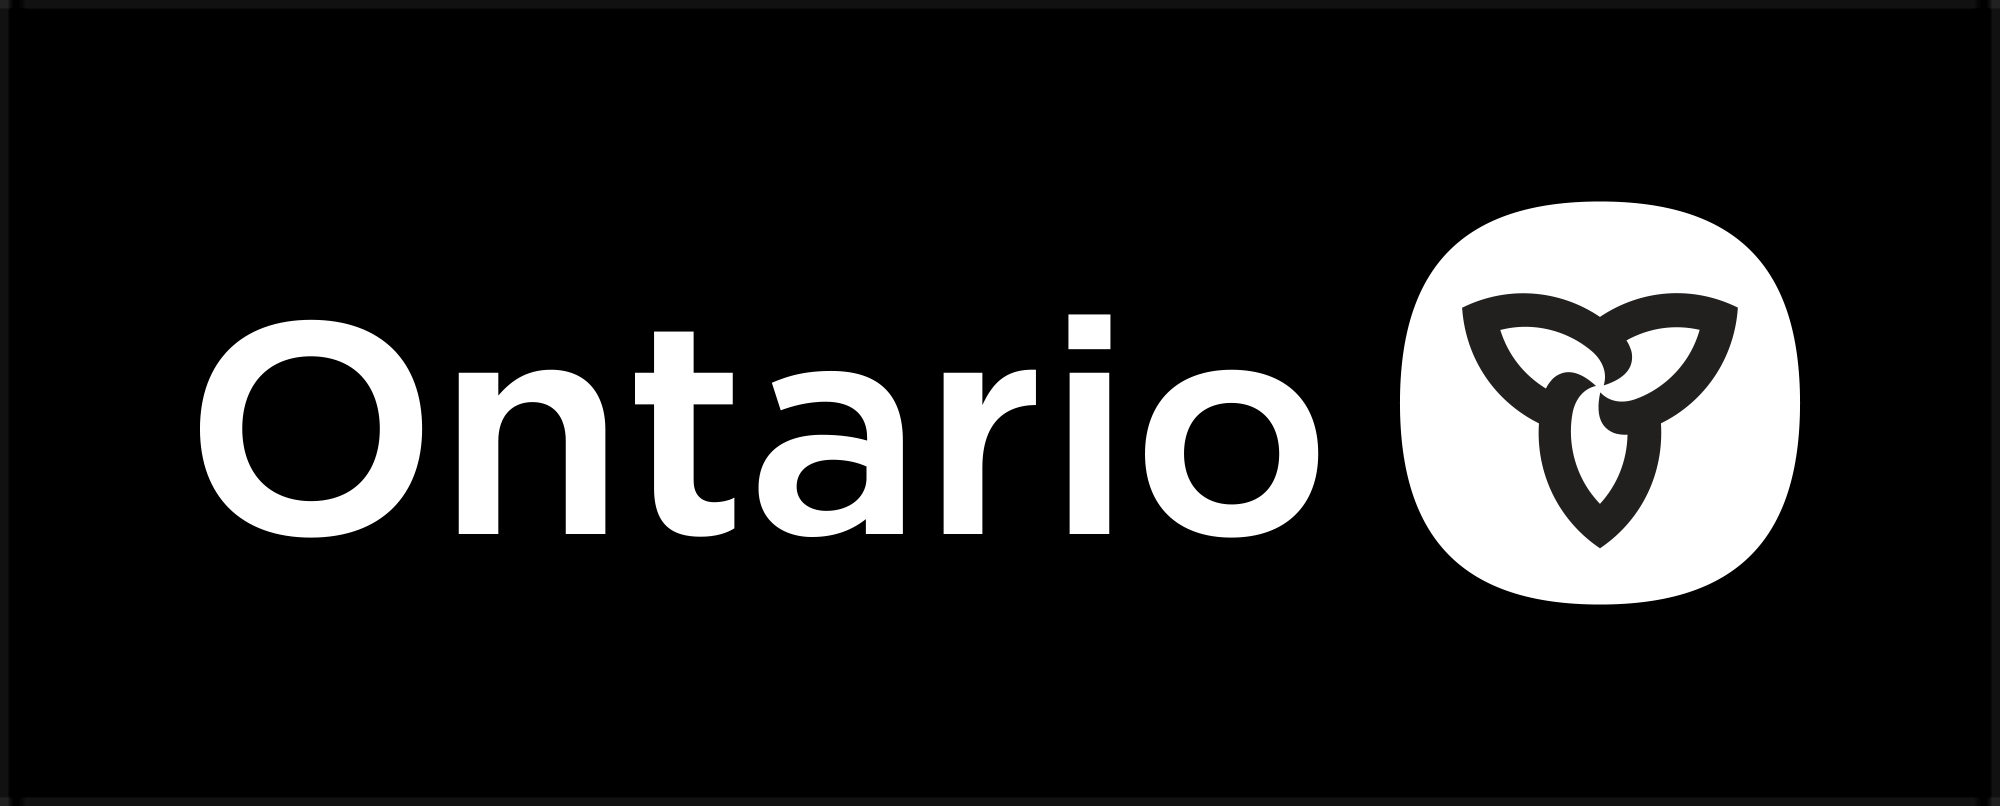 New Logo for Ontario